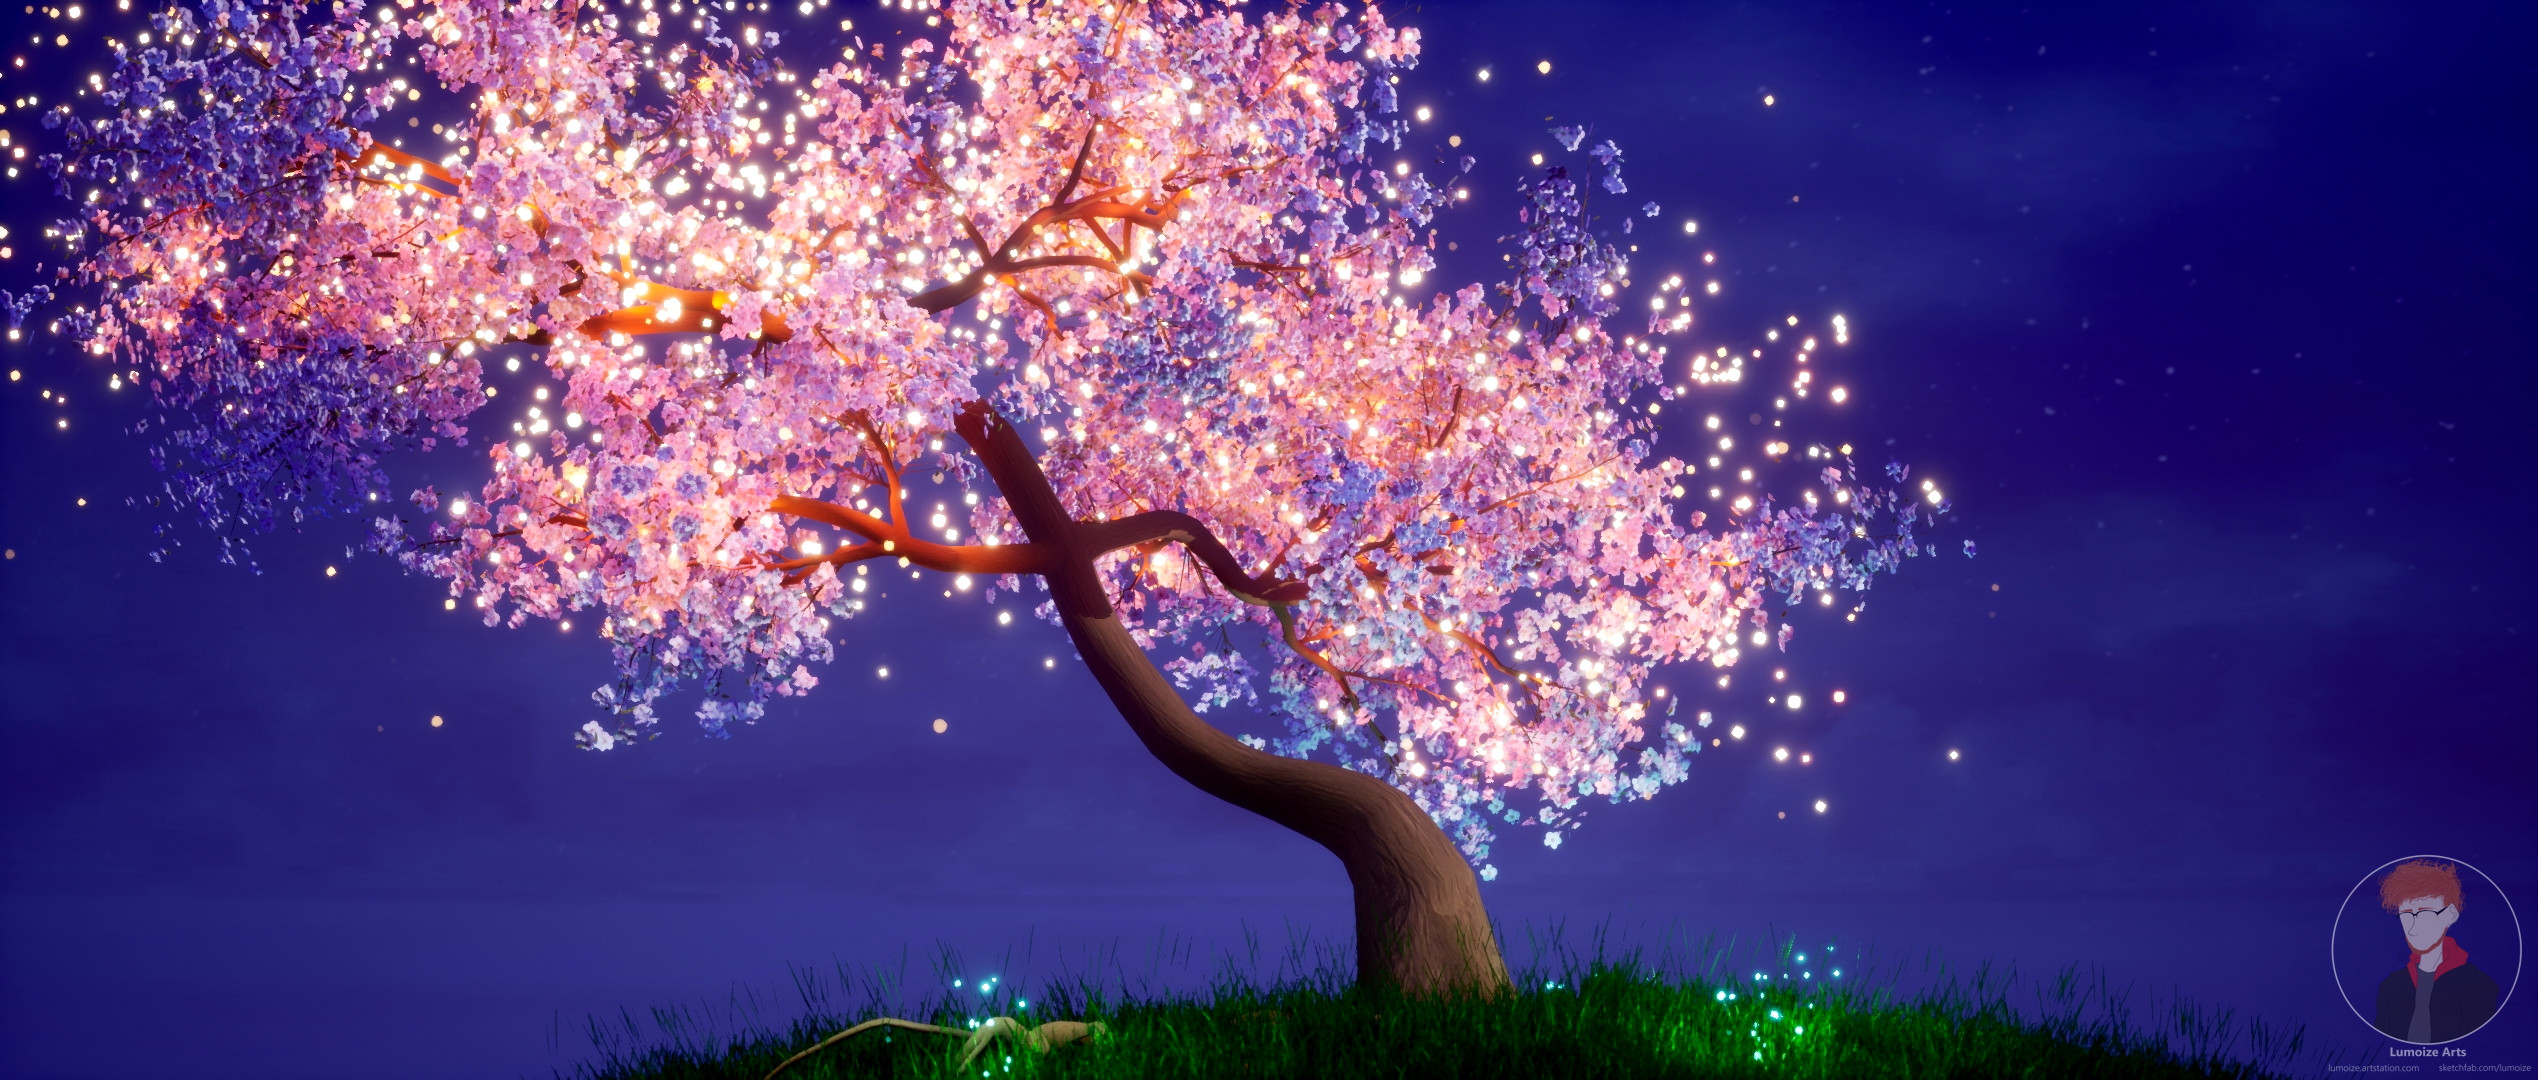 Brendon Kibler Portoflio - Mystical Cherry Tree Animated Wallpaper